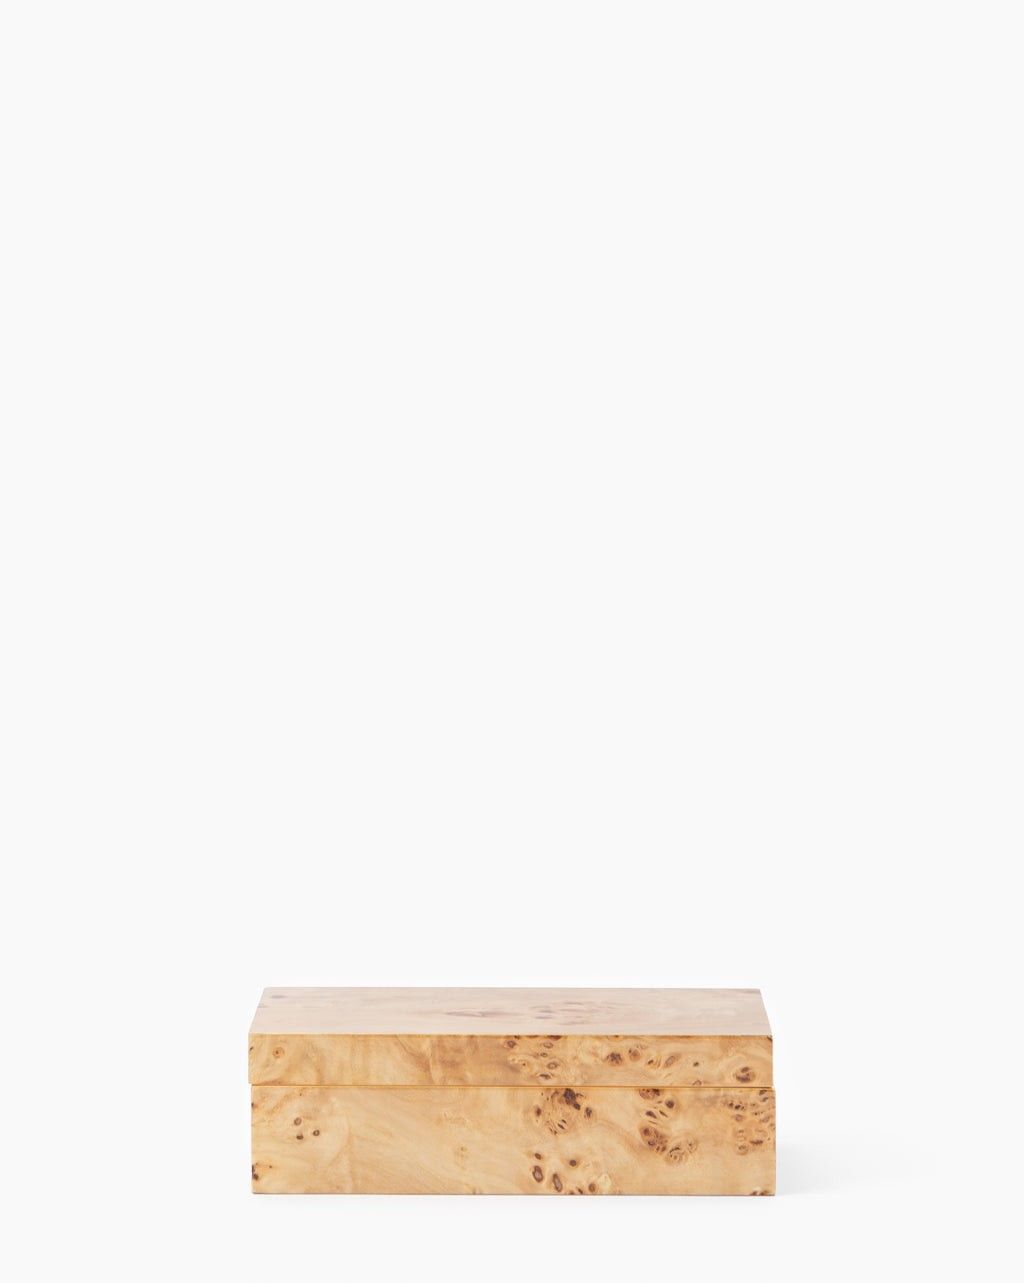 Burl Wood Box | McGee & Co.